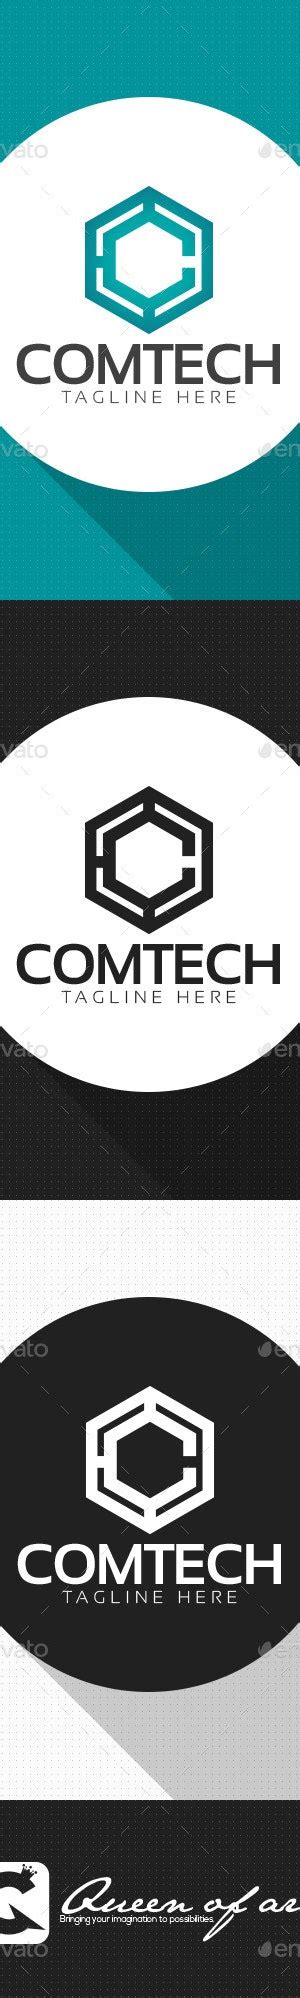 Comtech Logo By Queenofart Graphicriver